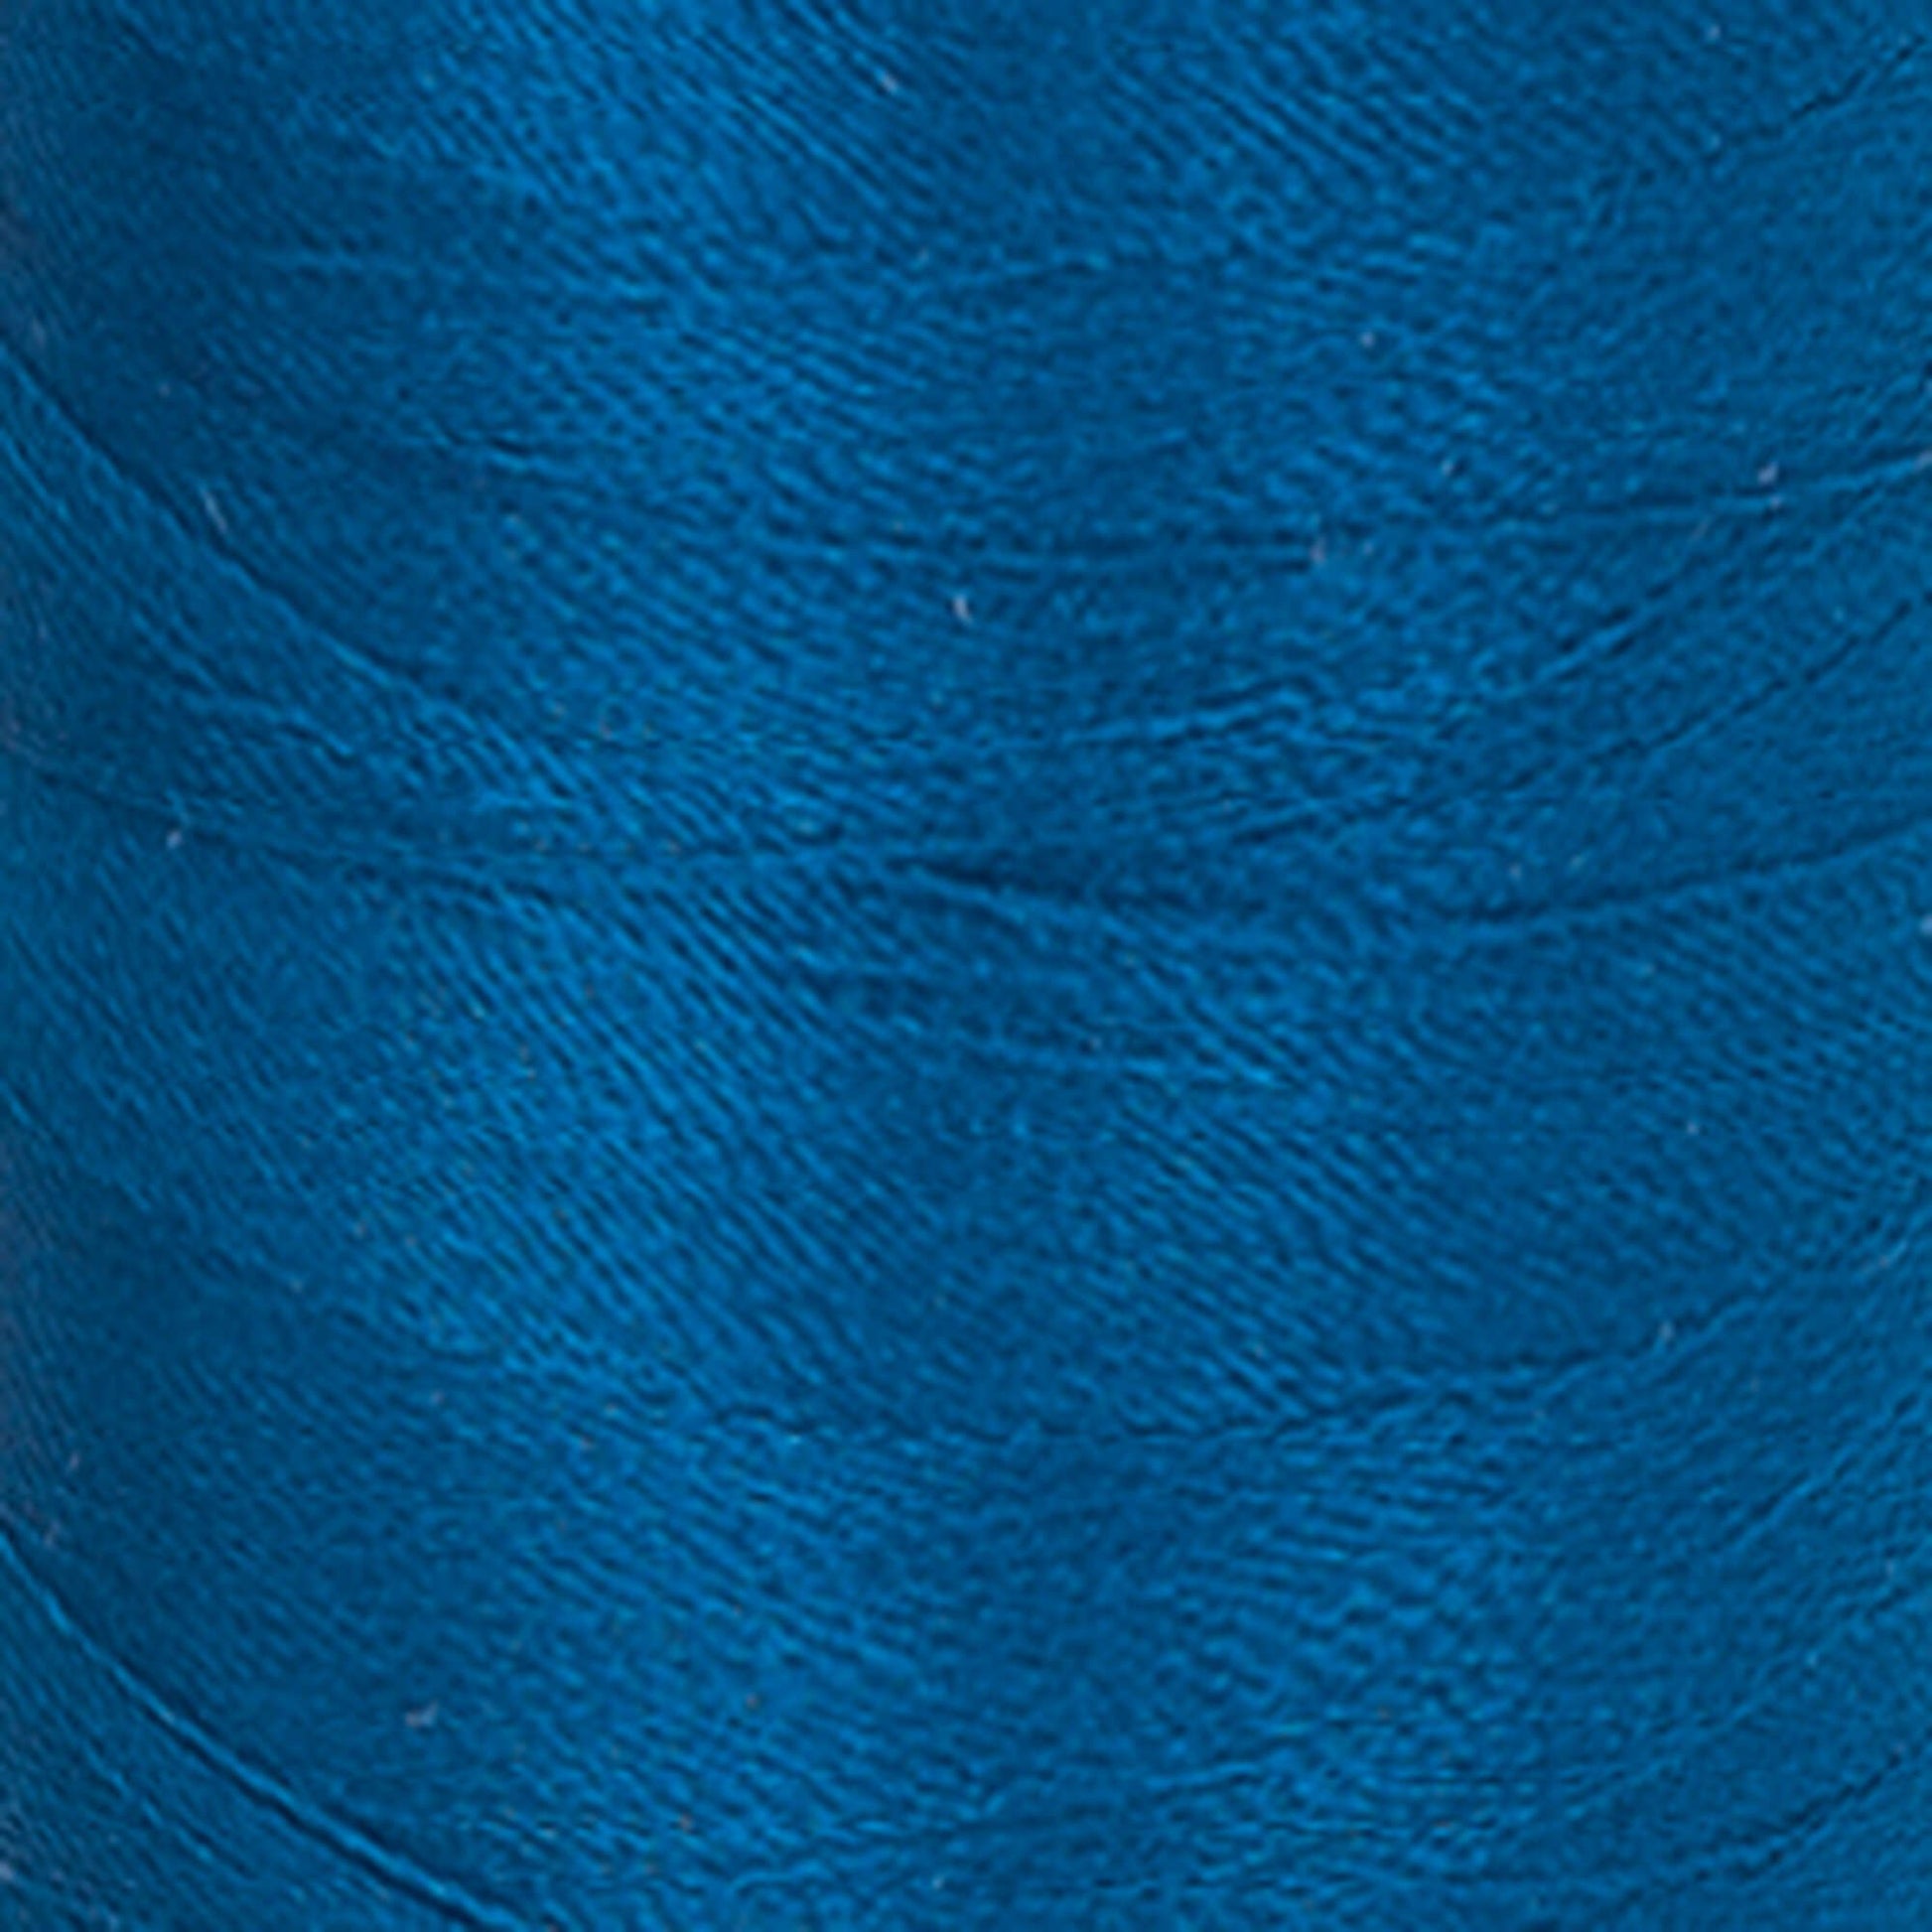 Coats & Clark Machine Embroidery Thread (1100 Yards) Monaco Blue